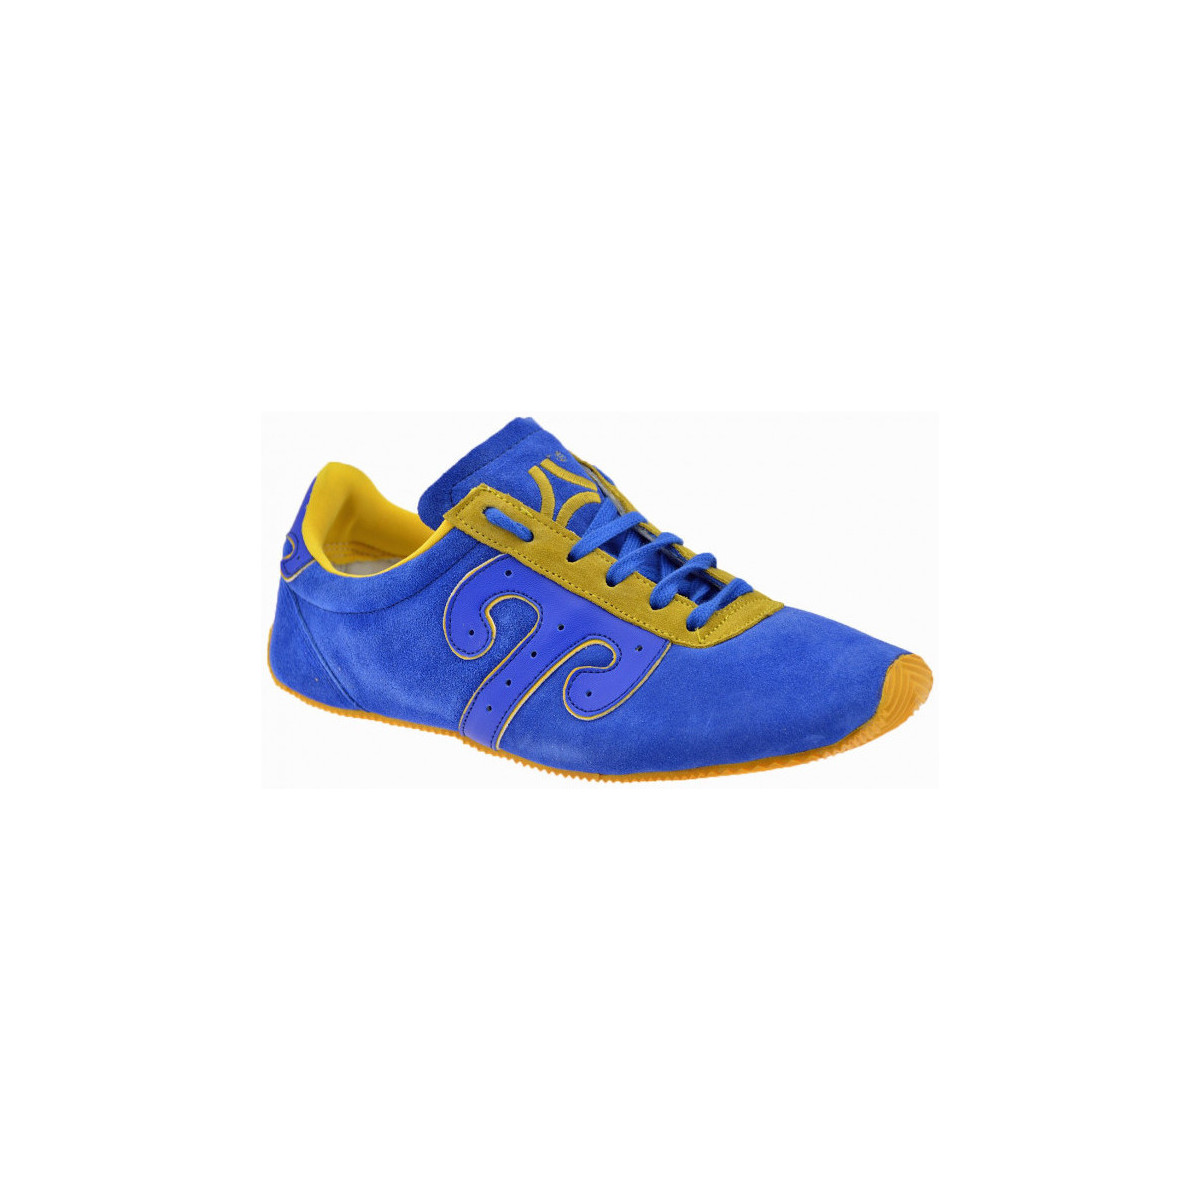 Schuhe Herren Sneaker Wushu Ruyi Marziale Blau